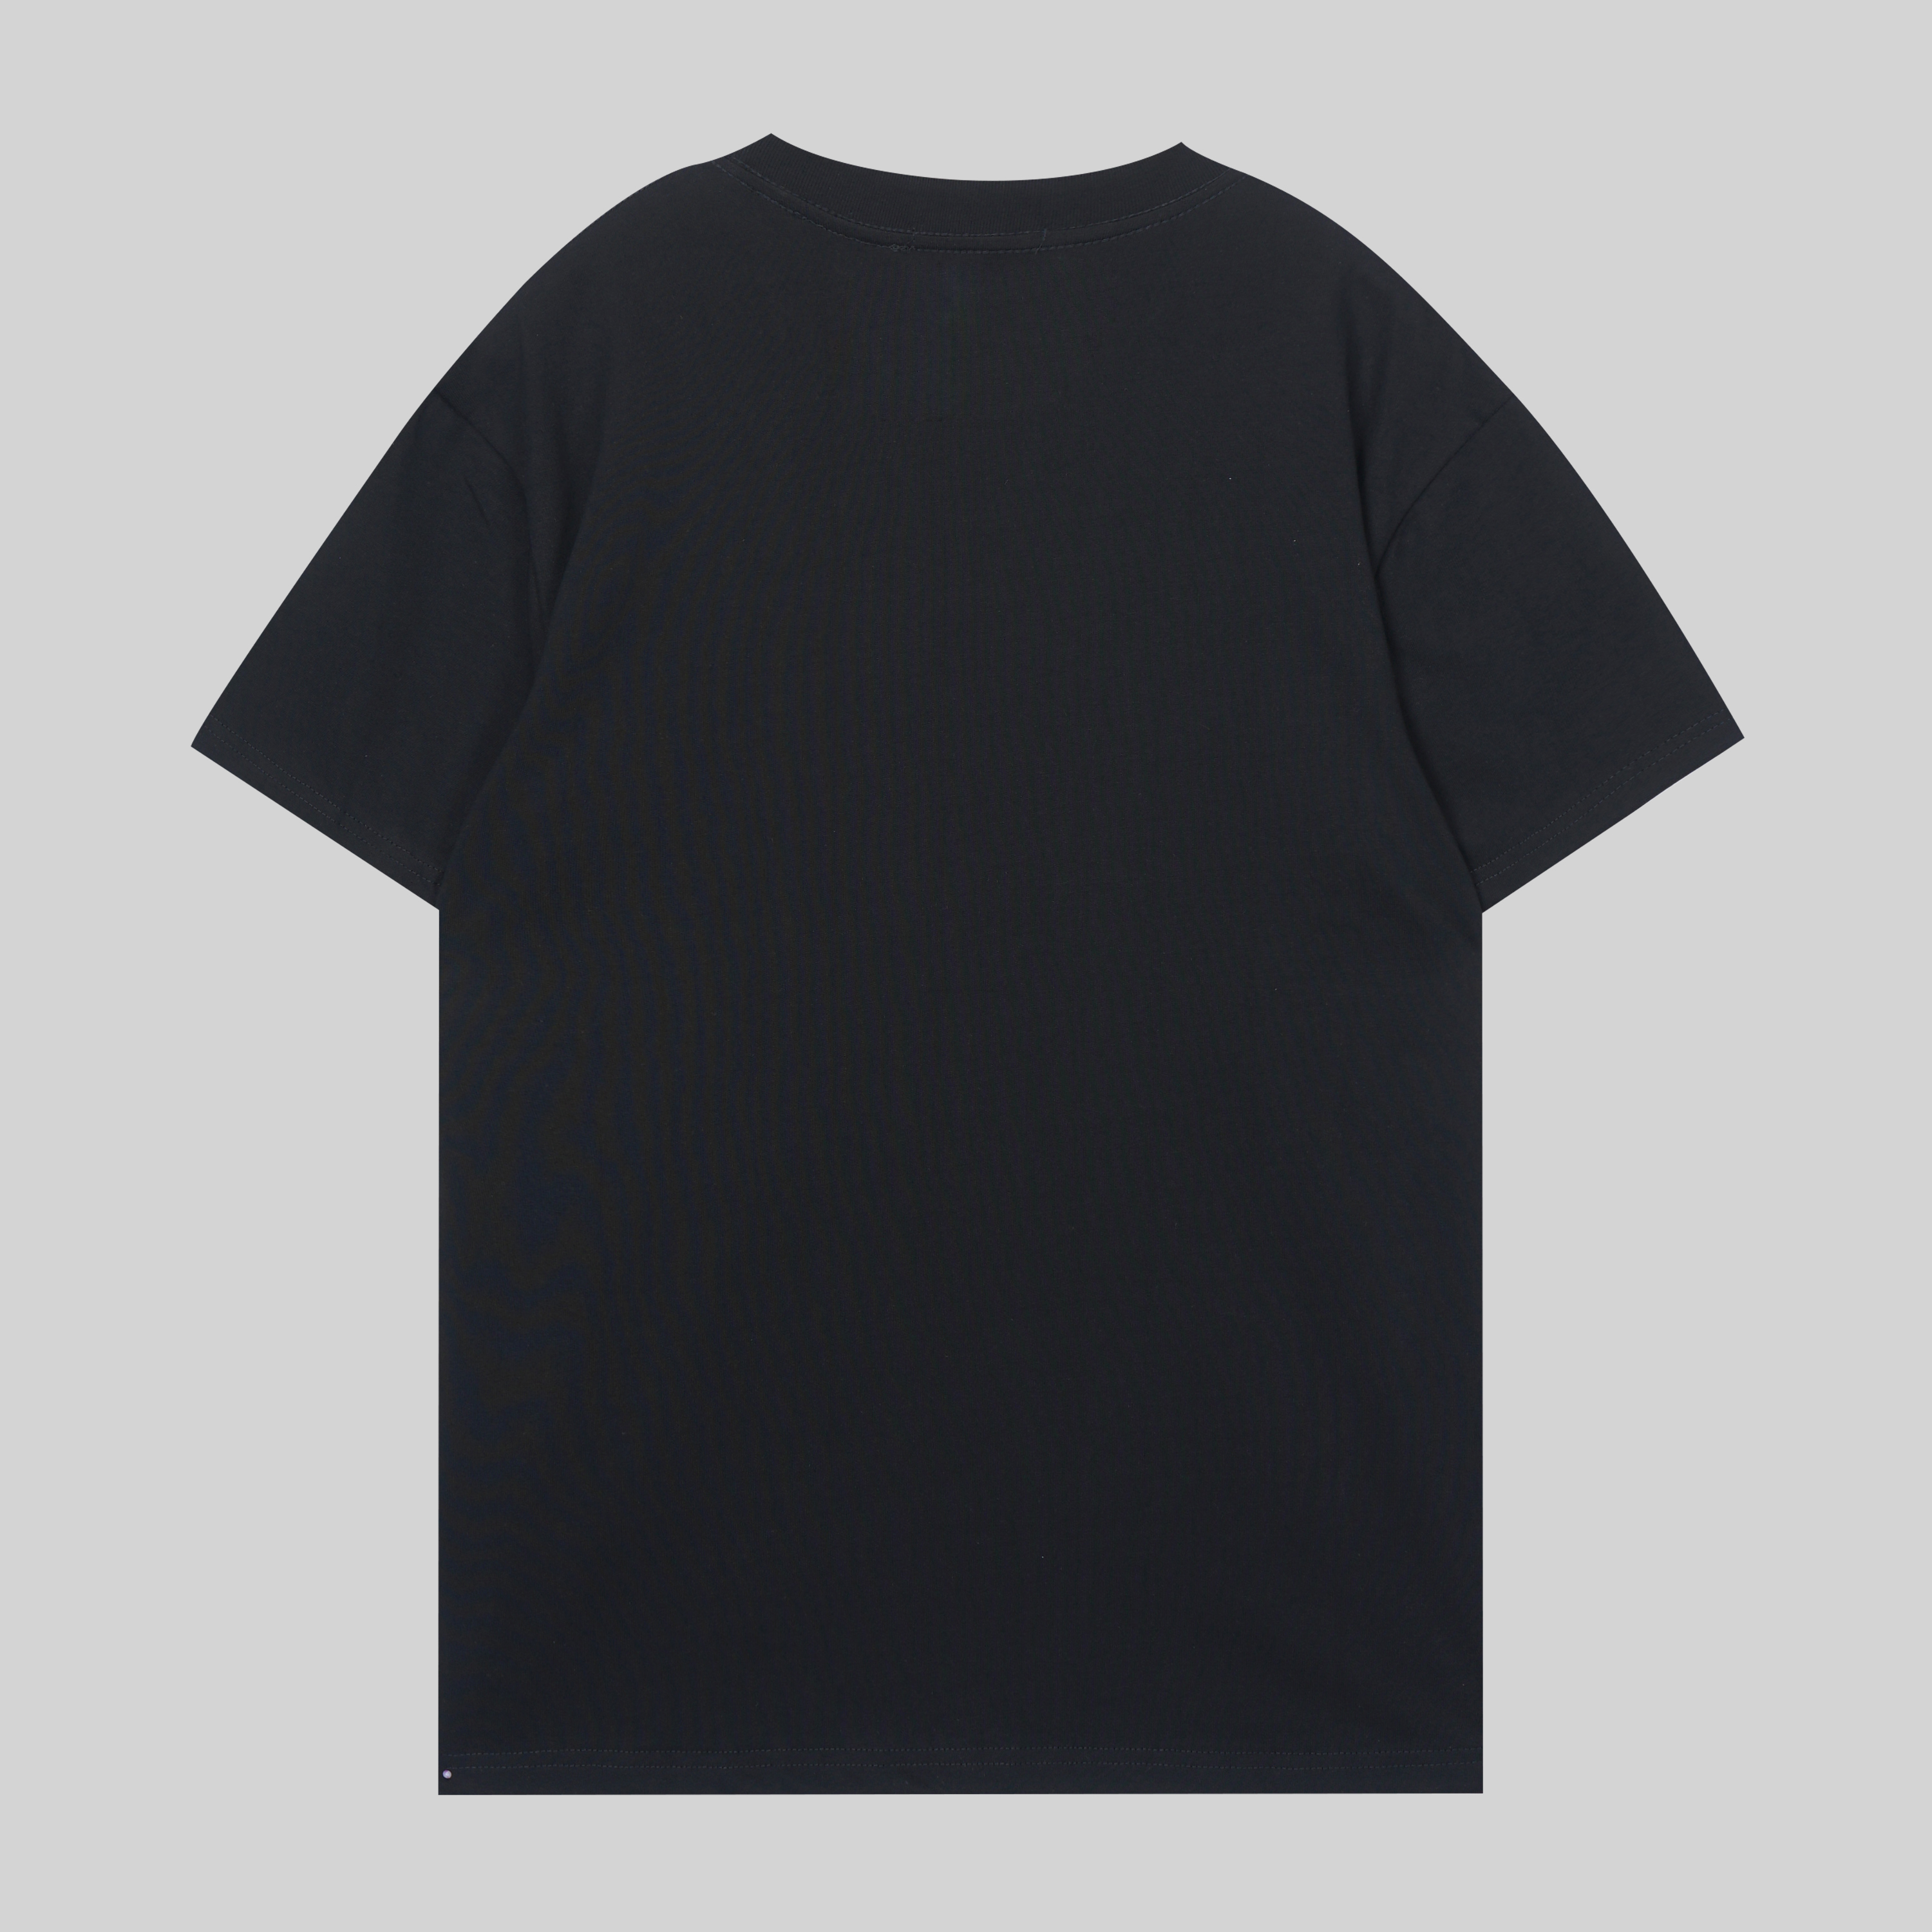 Burberry Short Sleeve T Shirts For Men # 270247, cheap Men's T shirts Short Sleeved, only $26!